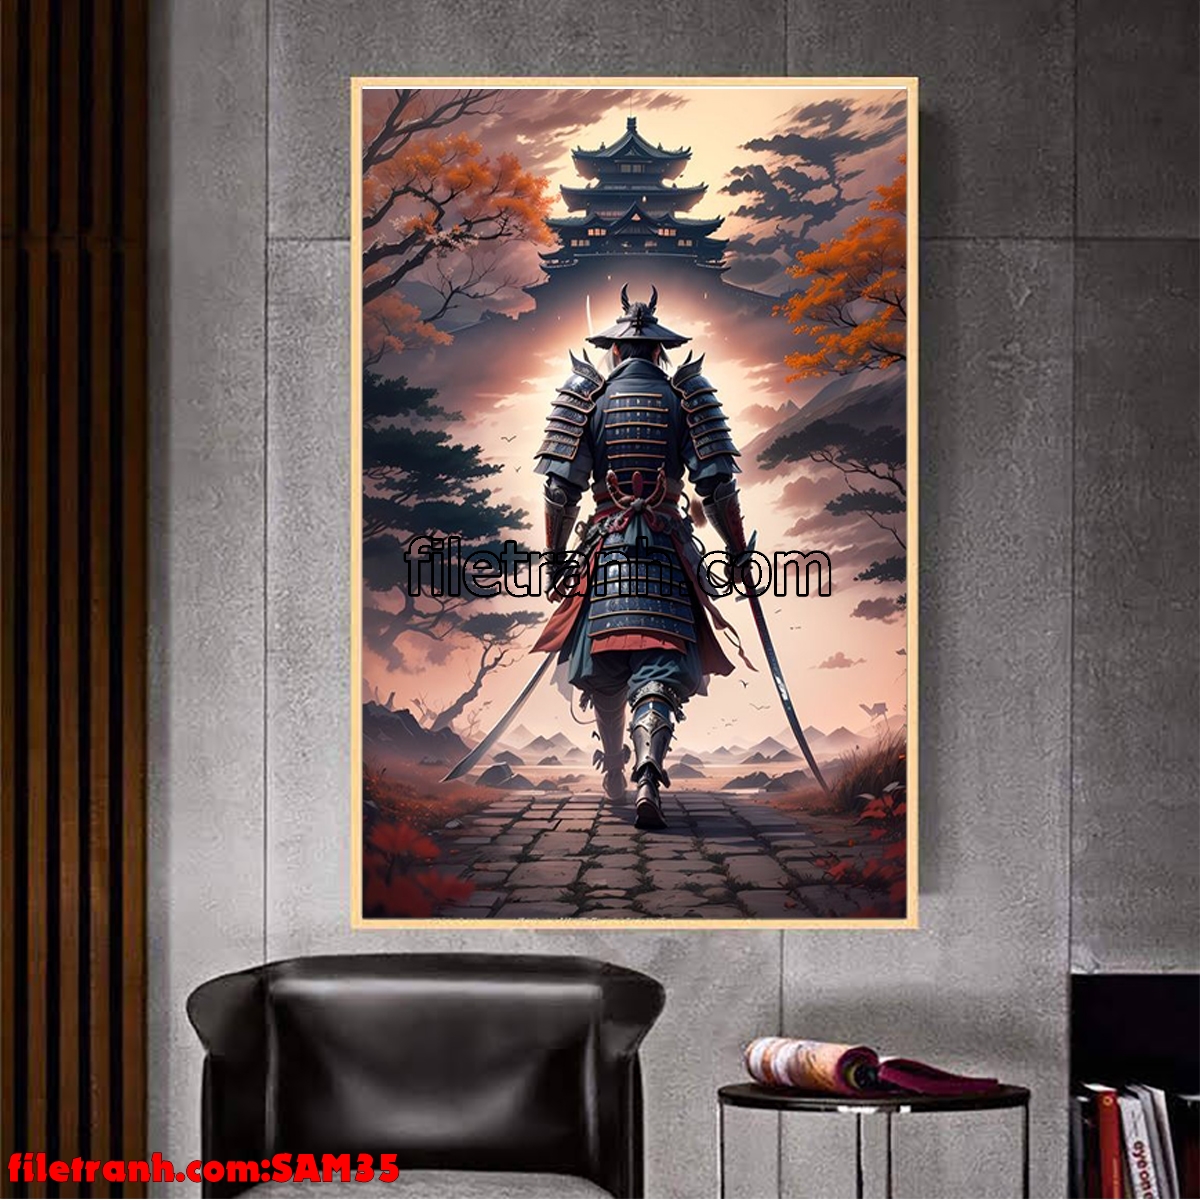 https://filetranh.com/tuong-nen/file-tranh-samurai-vo-si-nhat-ban-sam35.html